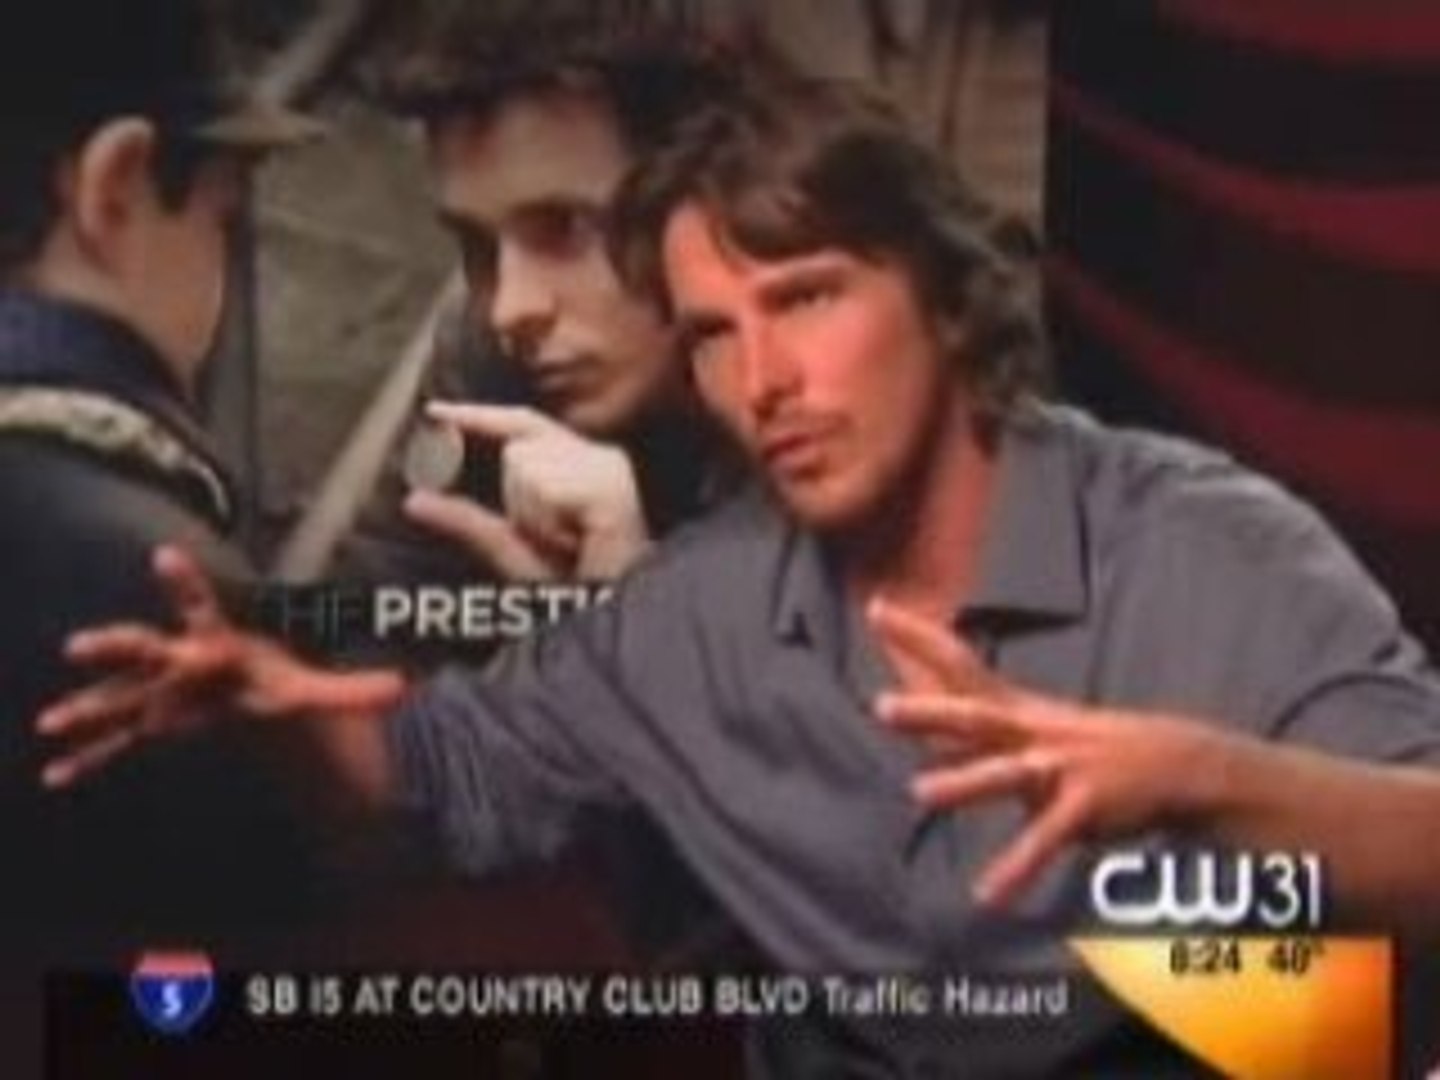 The Prestige / Interview #5 (Christian Bale)